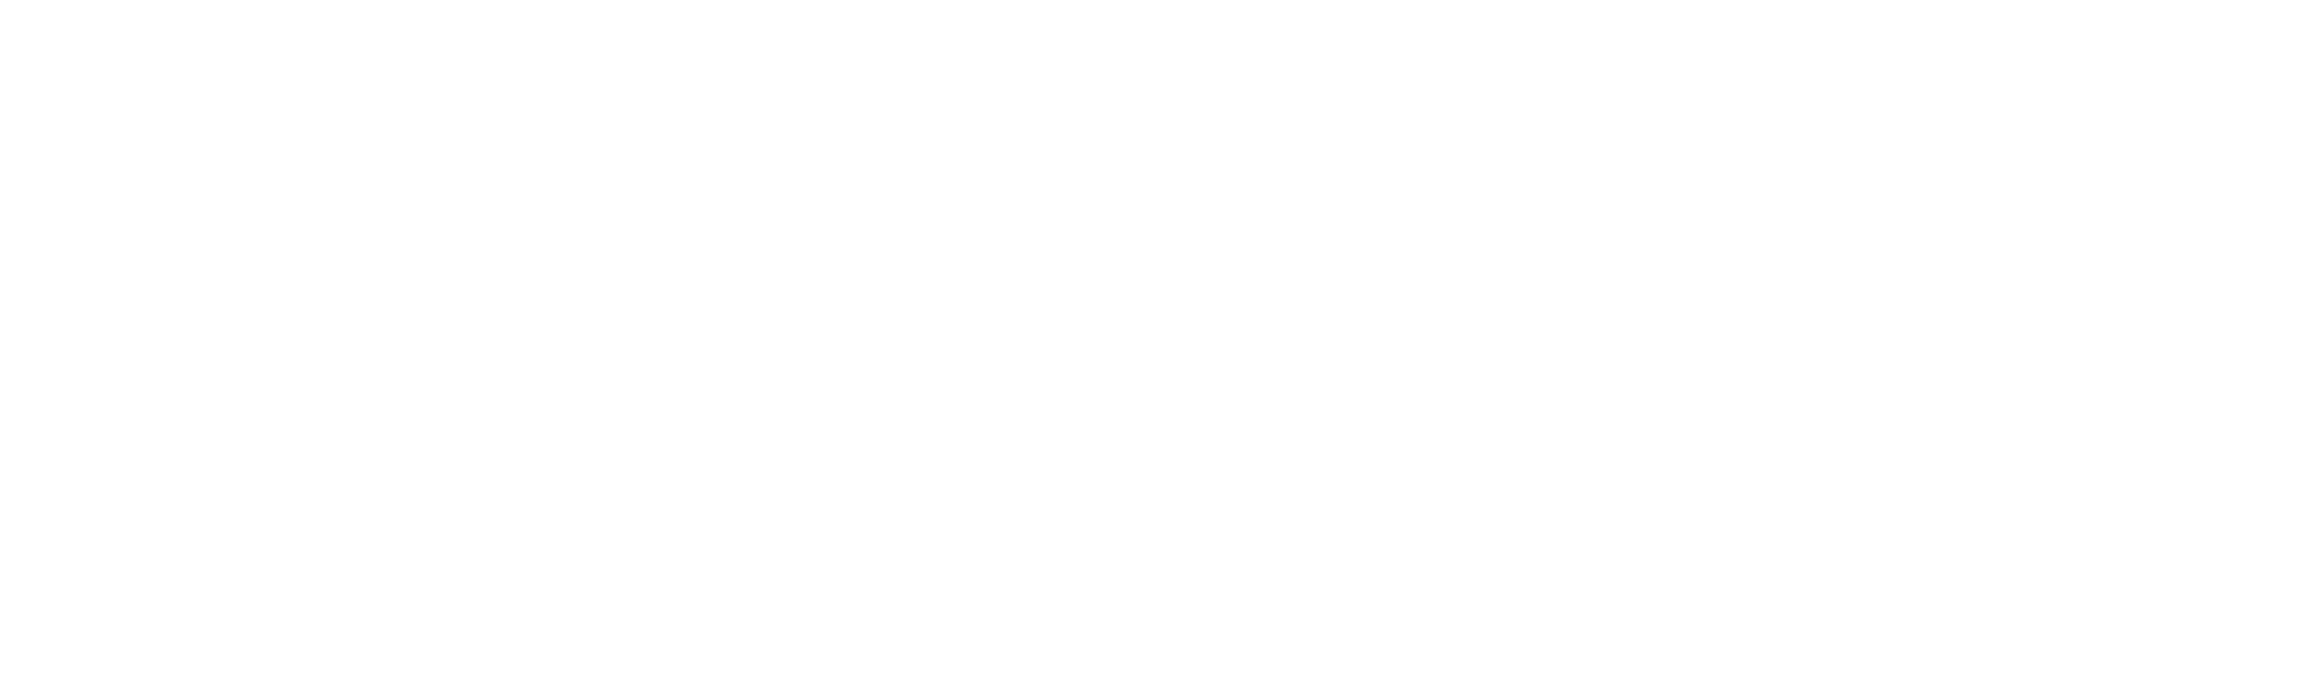 Music Bee Logo_W